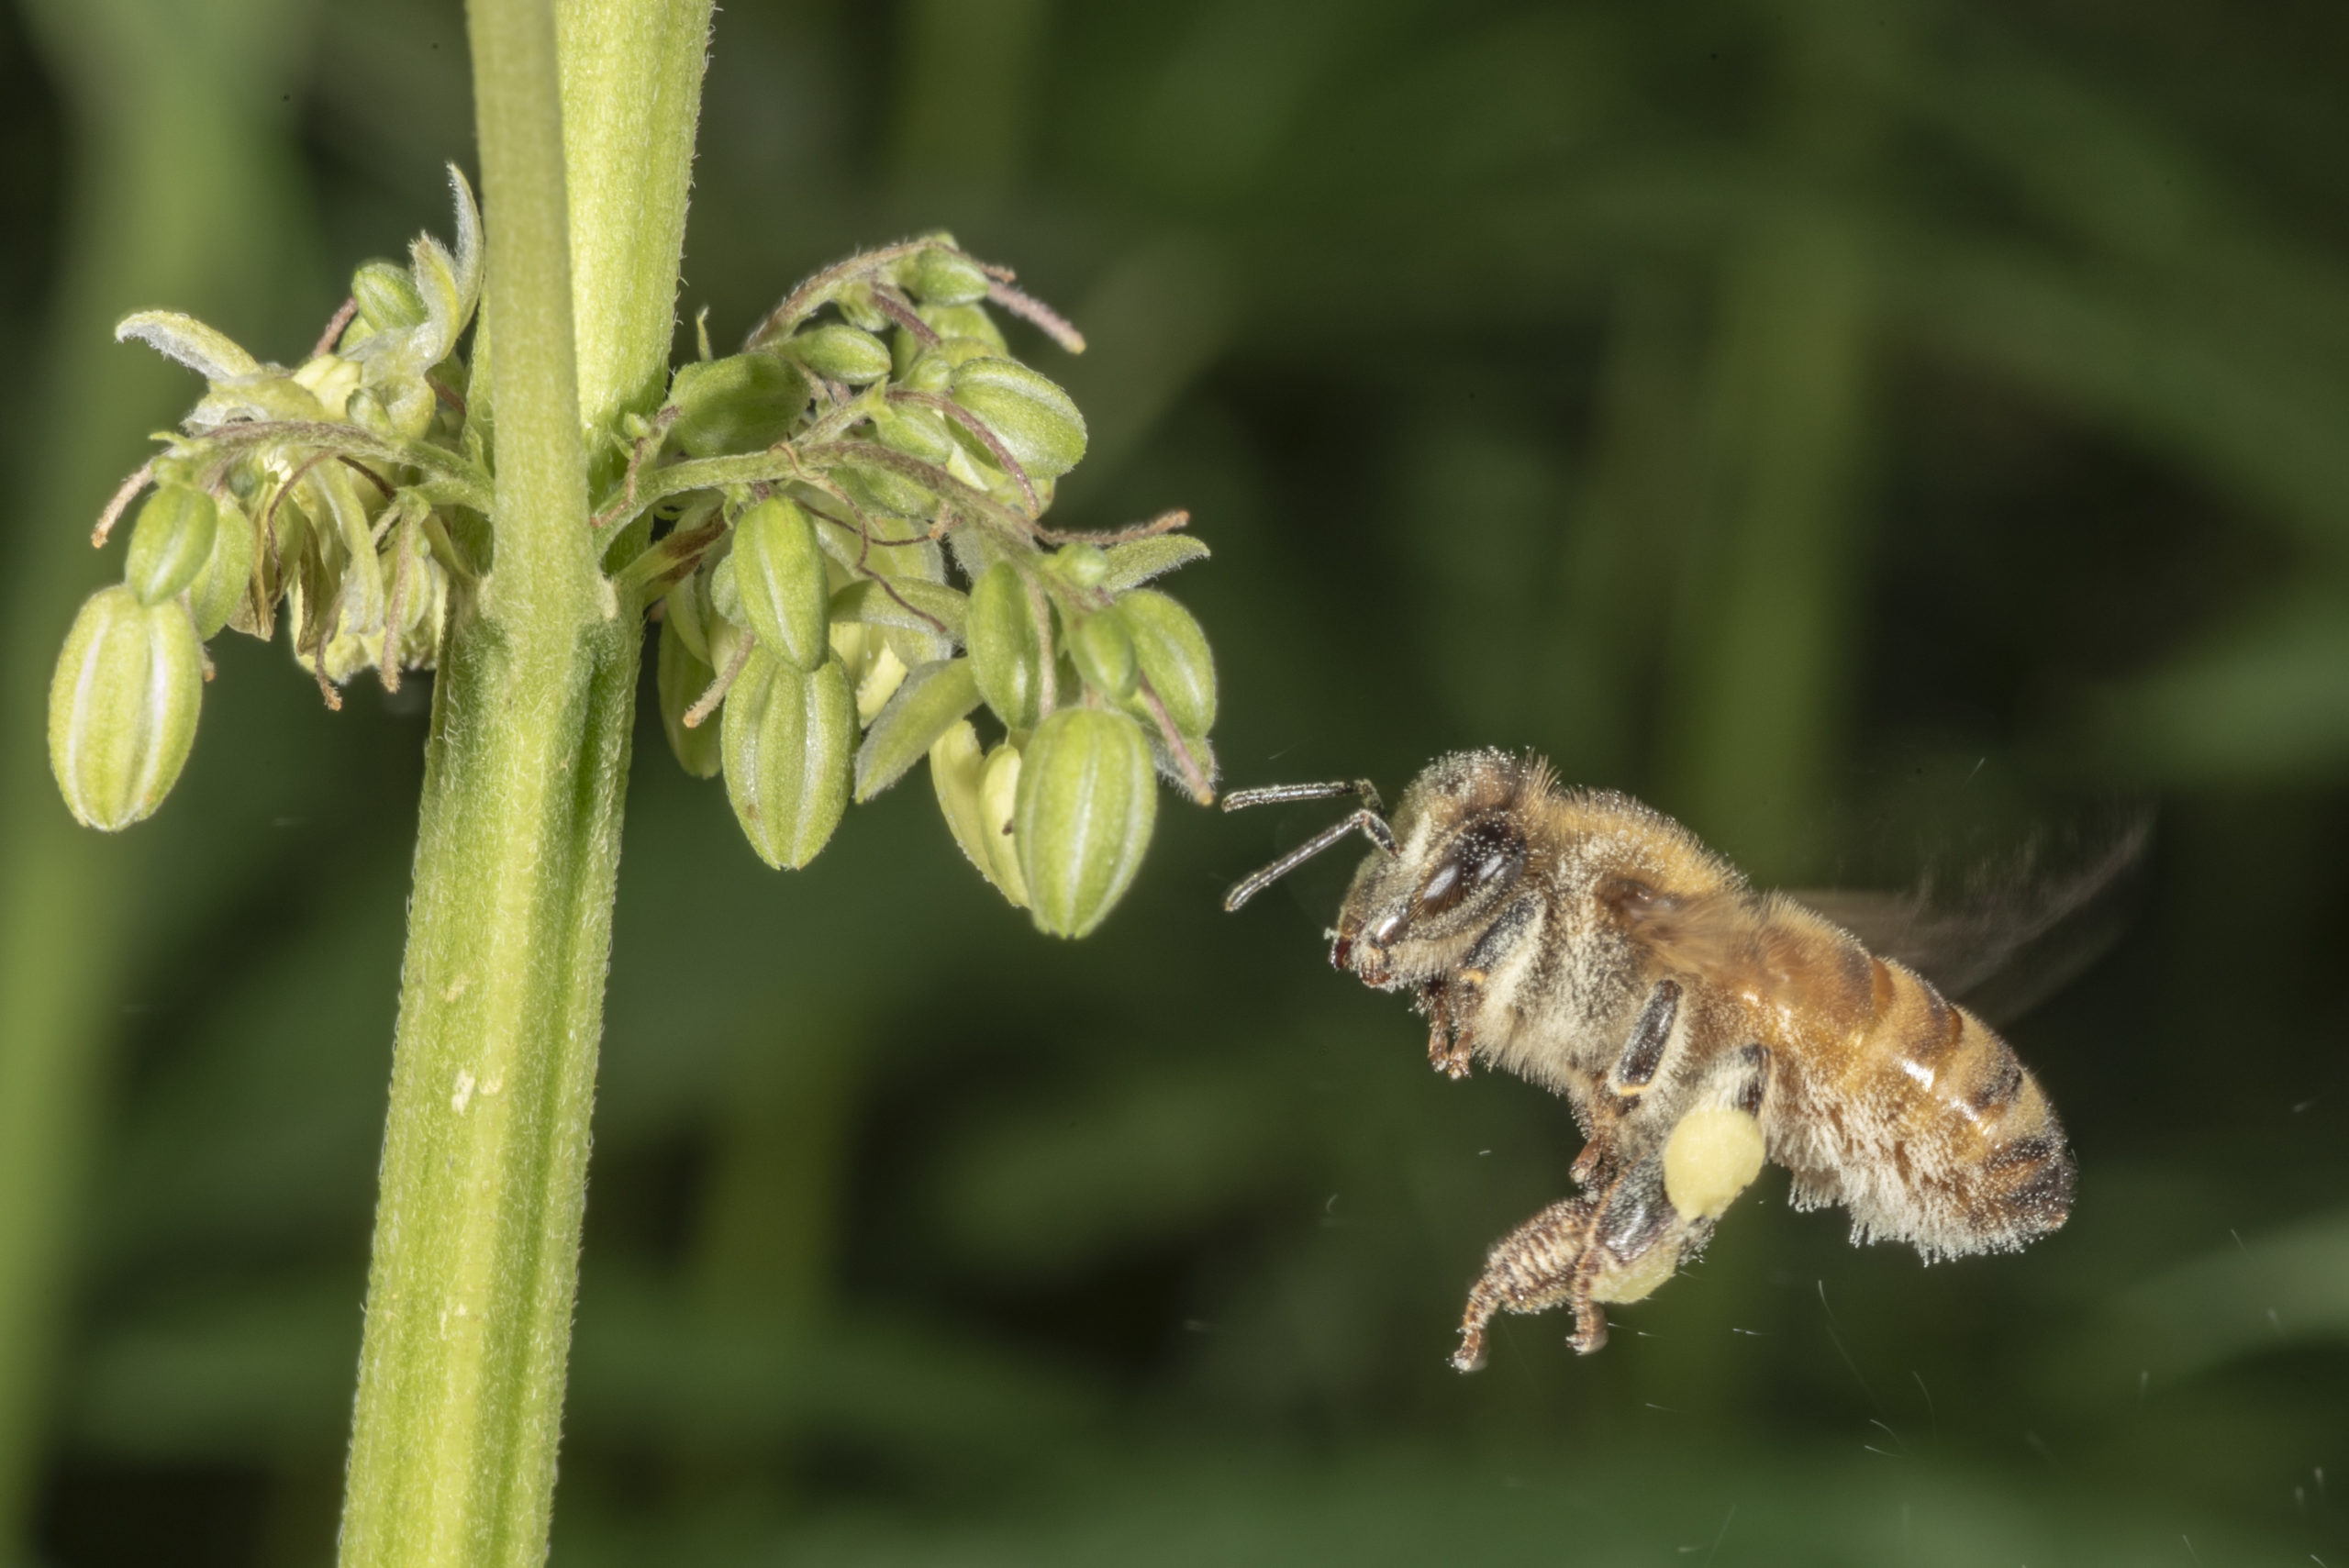 Image of a honey bee aproaching a hemp plant's flowers